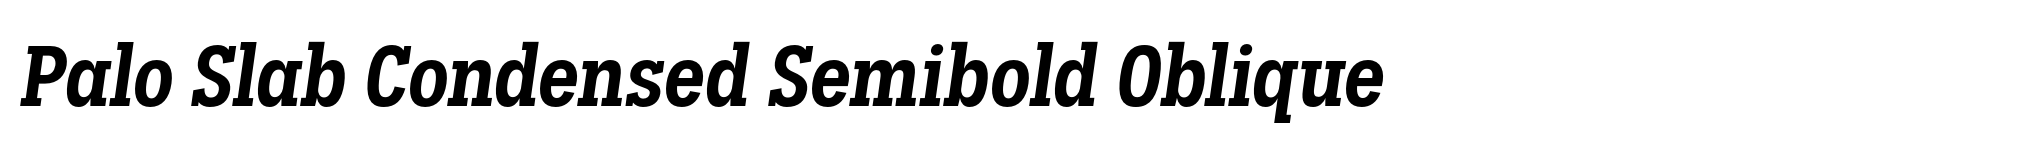 Palo Slab Condensed Semibold Oblique image